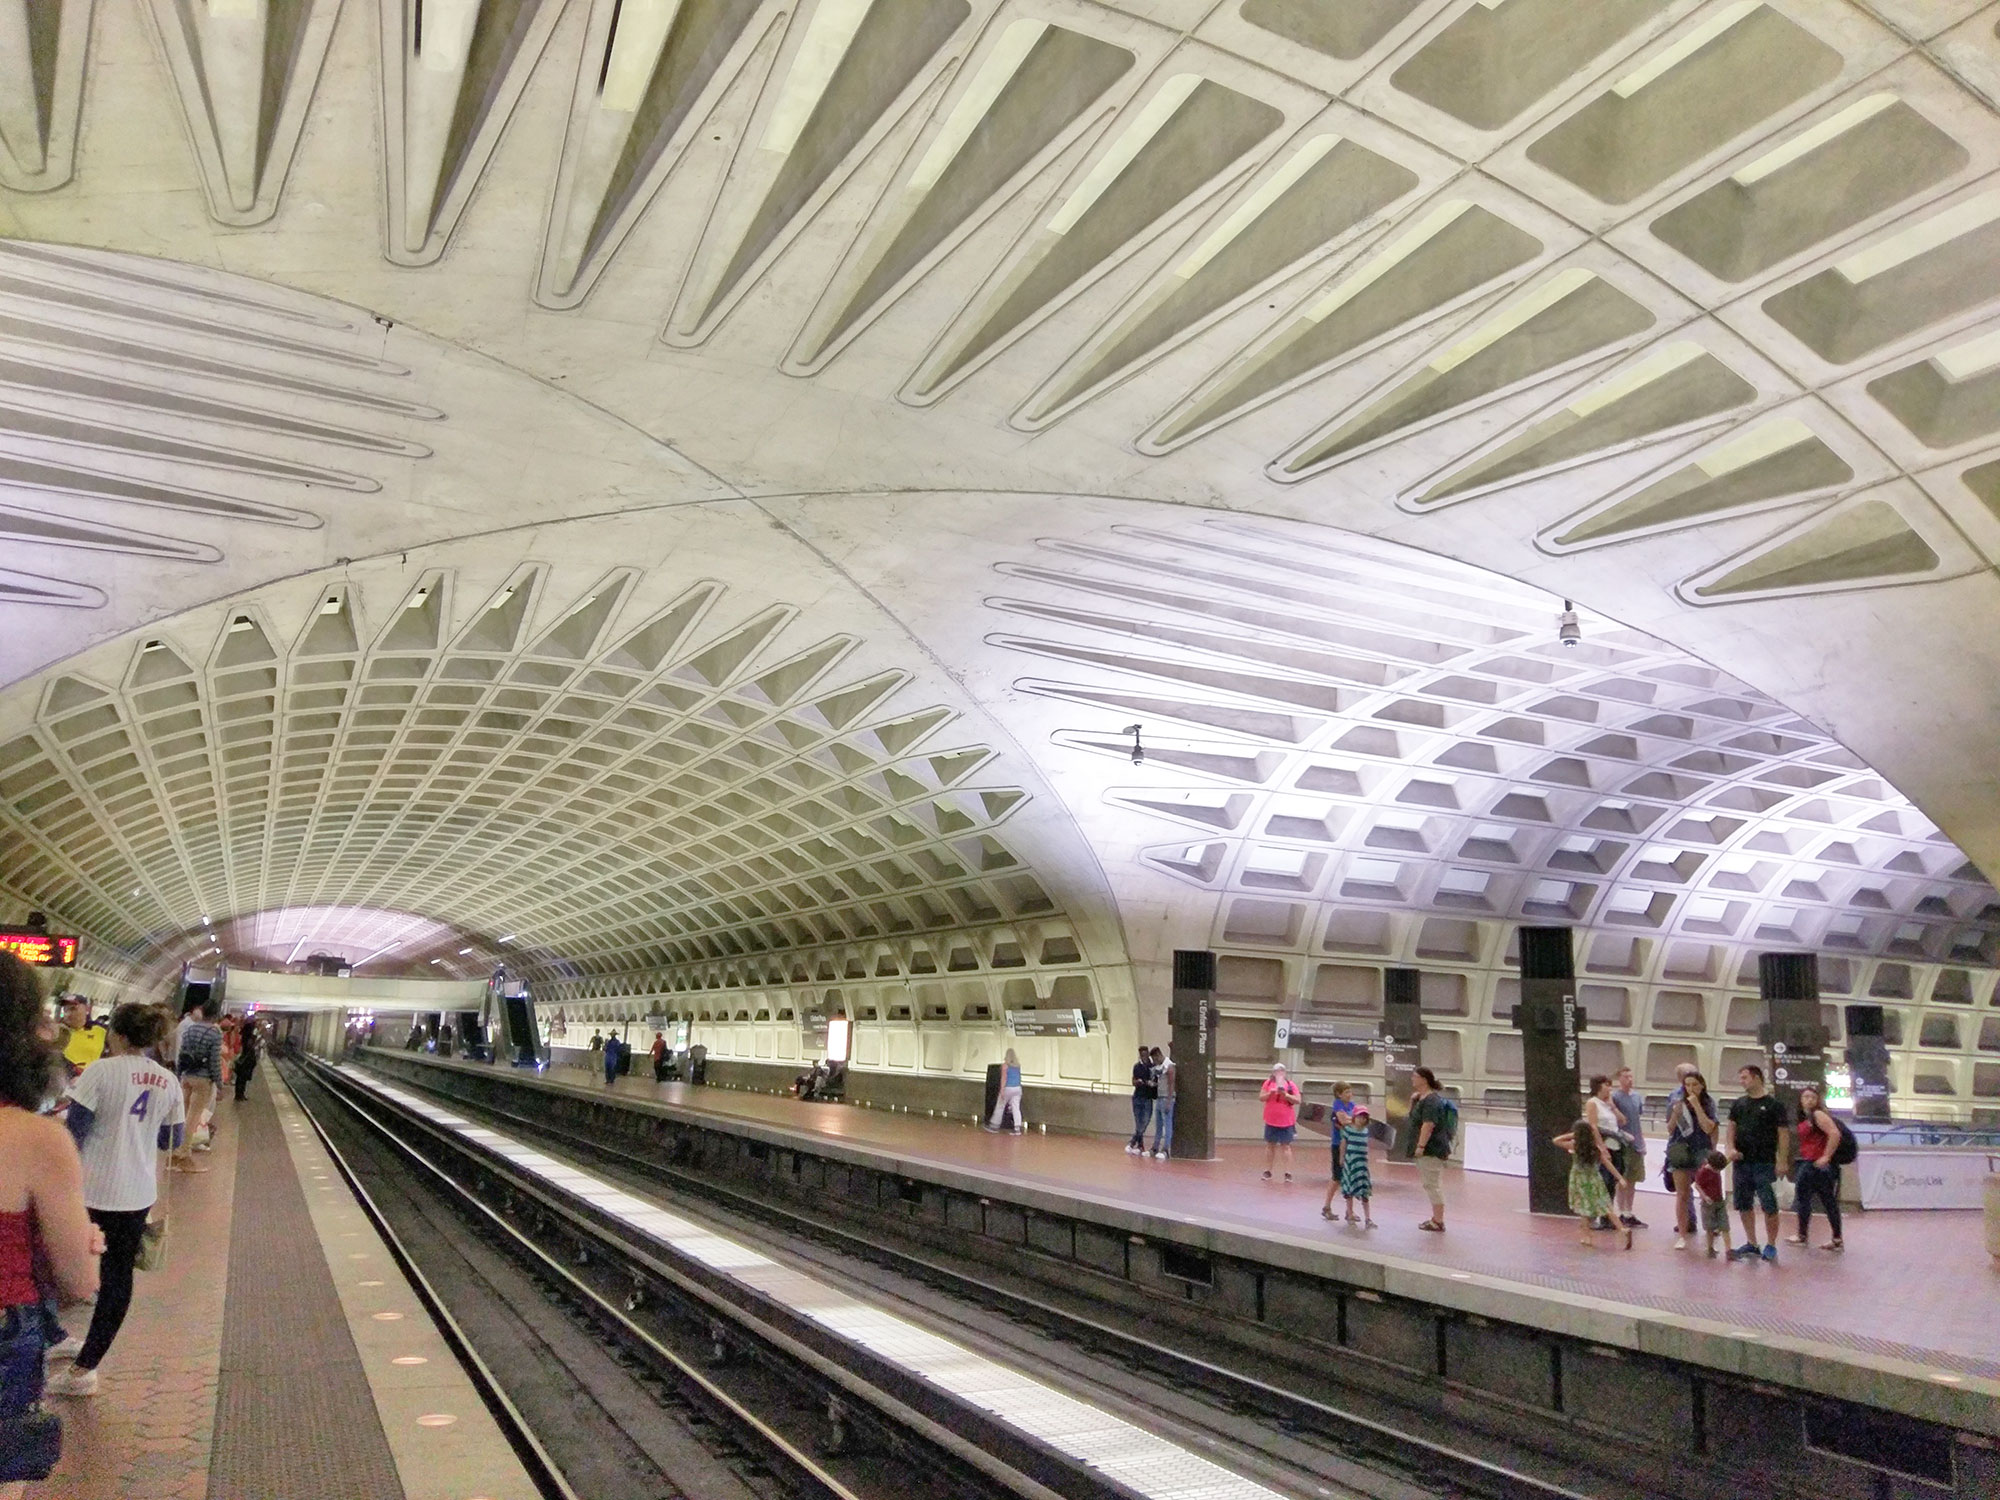 A subway station in Washington D.C.